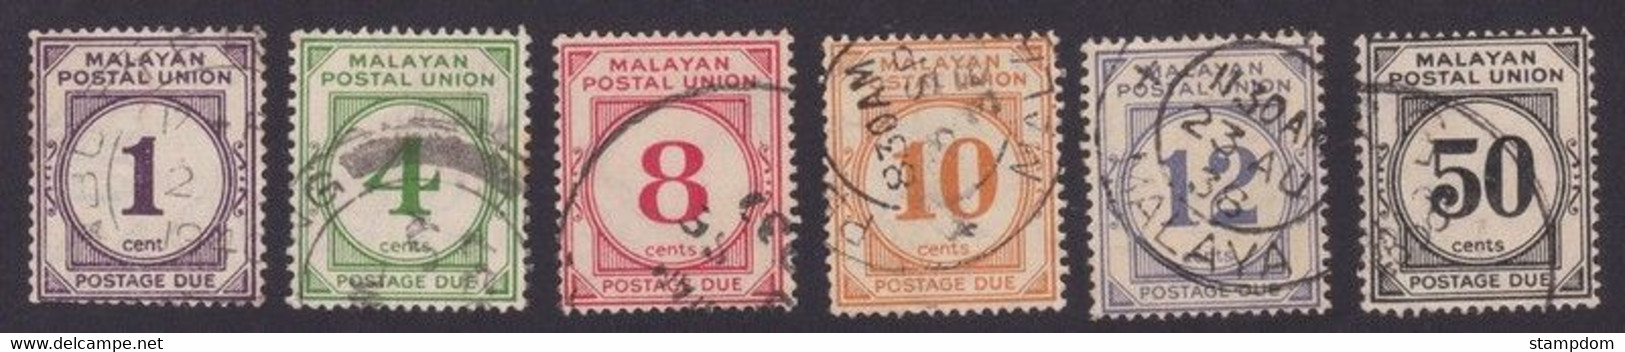 MALAYAN POSTAL UNION 1936-38 Postage Due Sc#J7-12 - USED @B607 - Malayan Postal Union